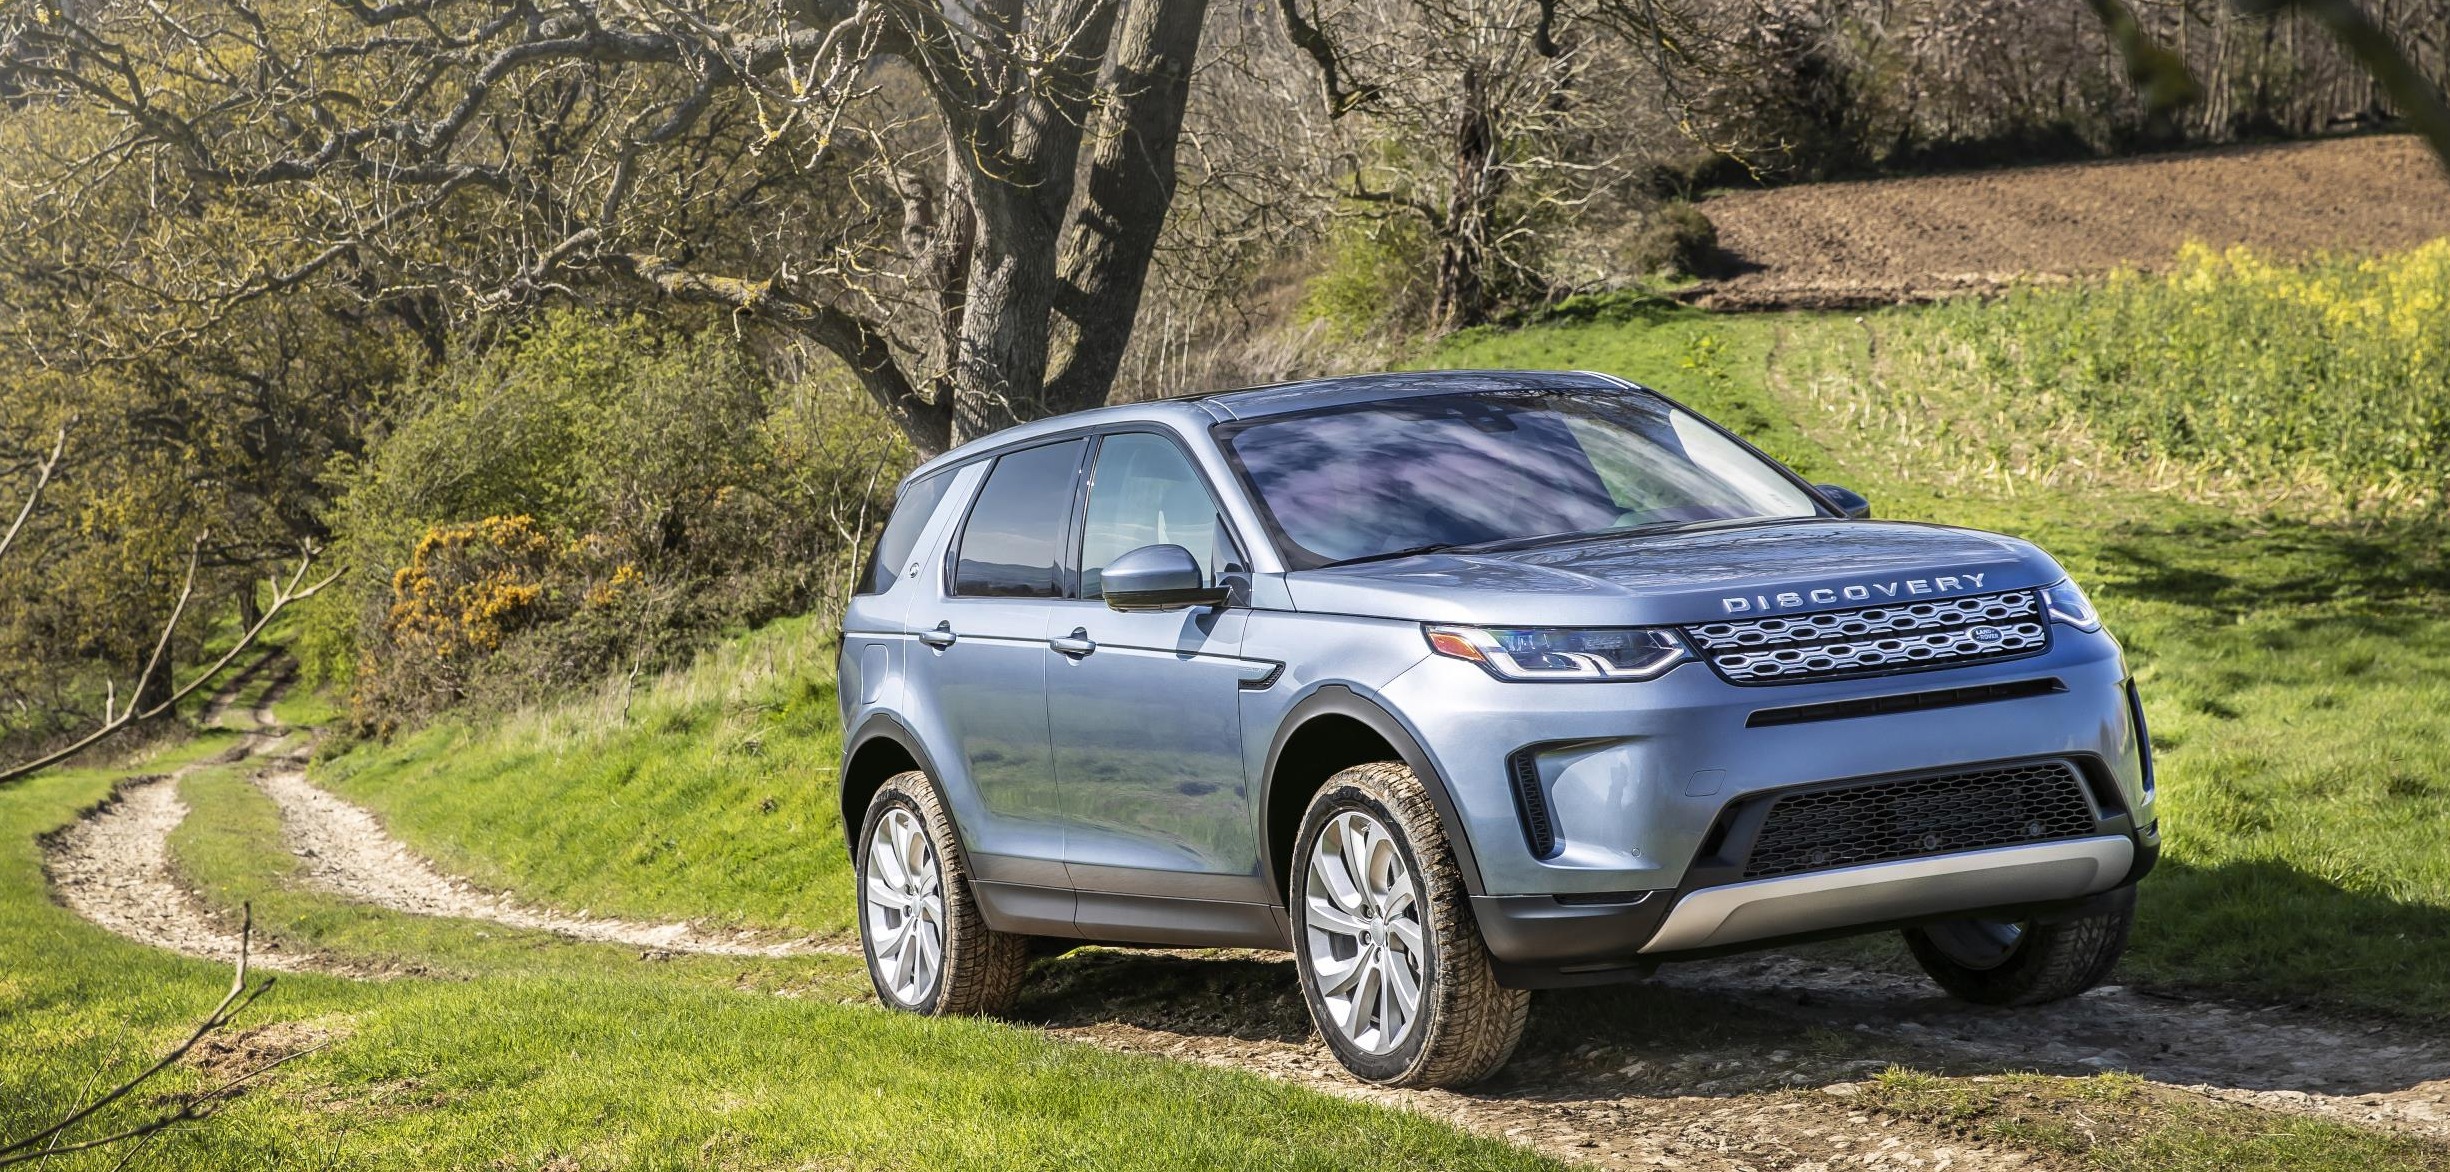 New hybrid Land Rover Discovery Sport - Electric Hybrid Technology International